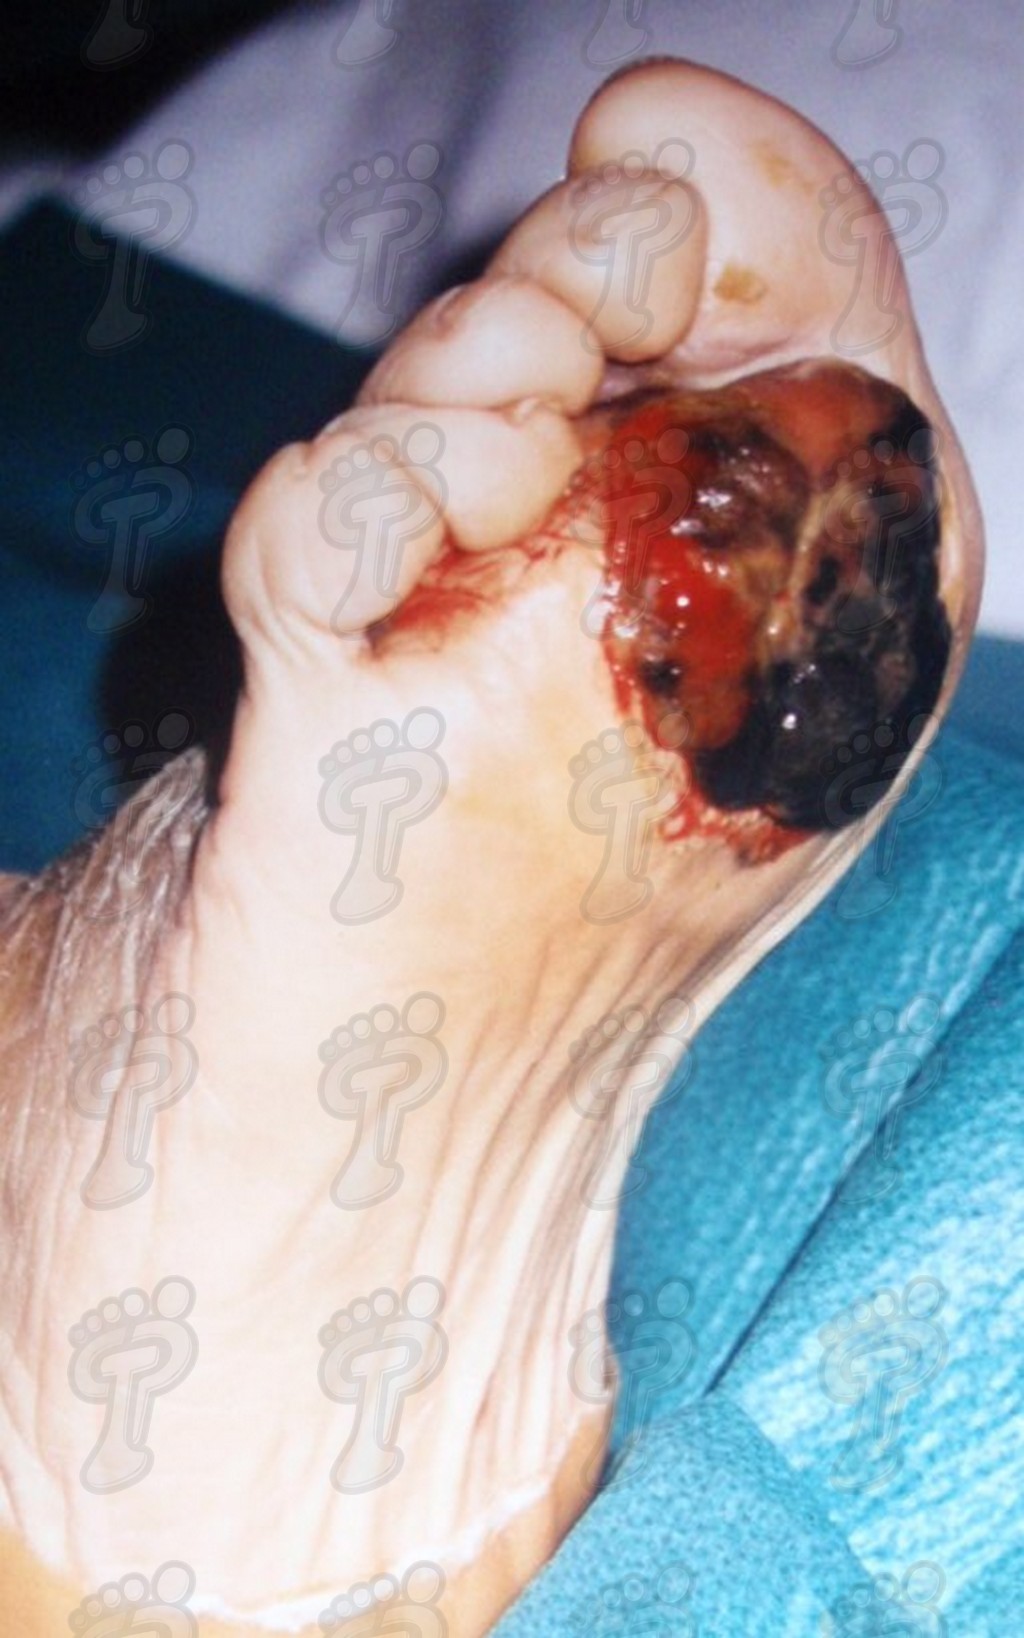 Malignant tumors in foot